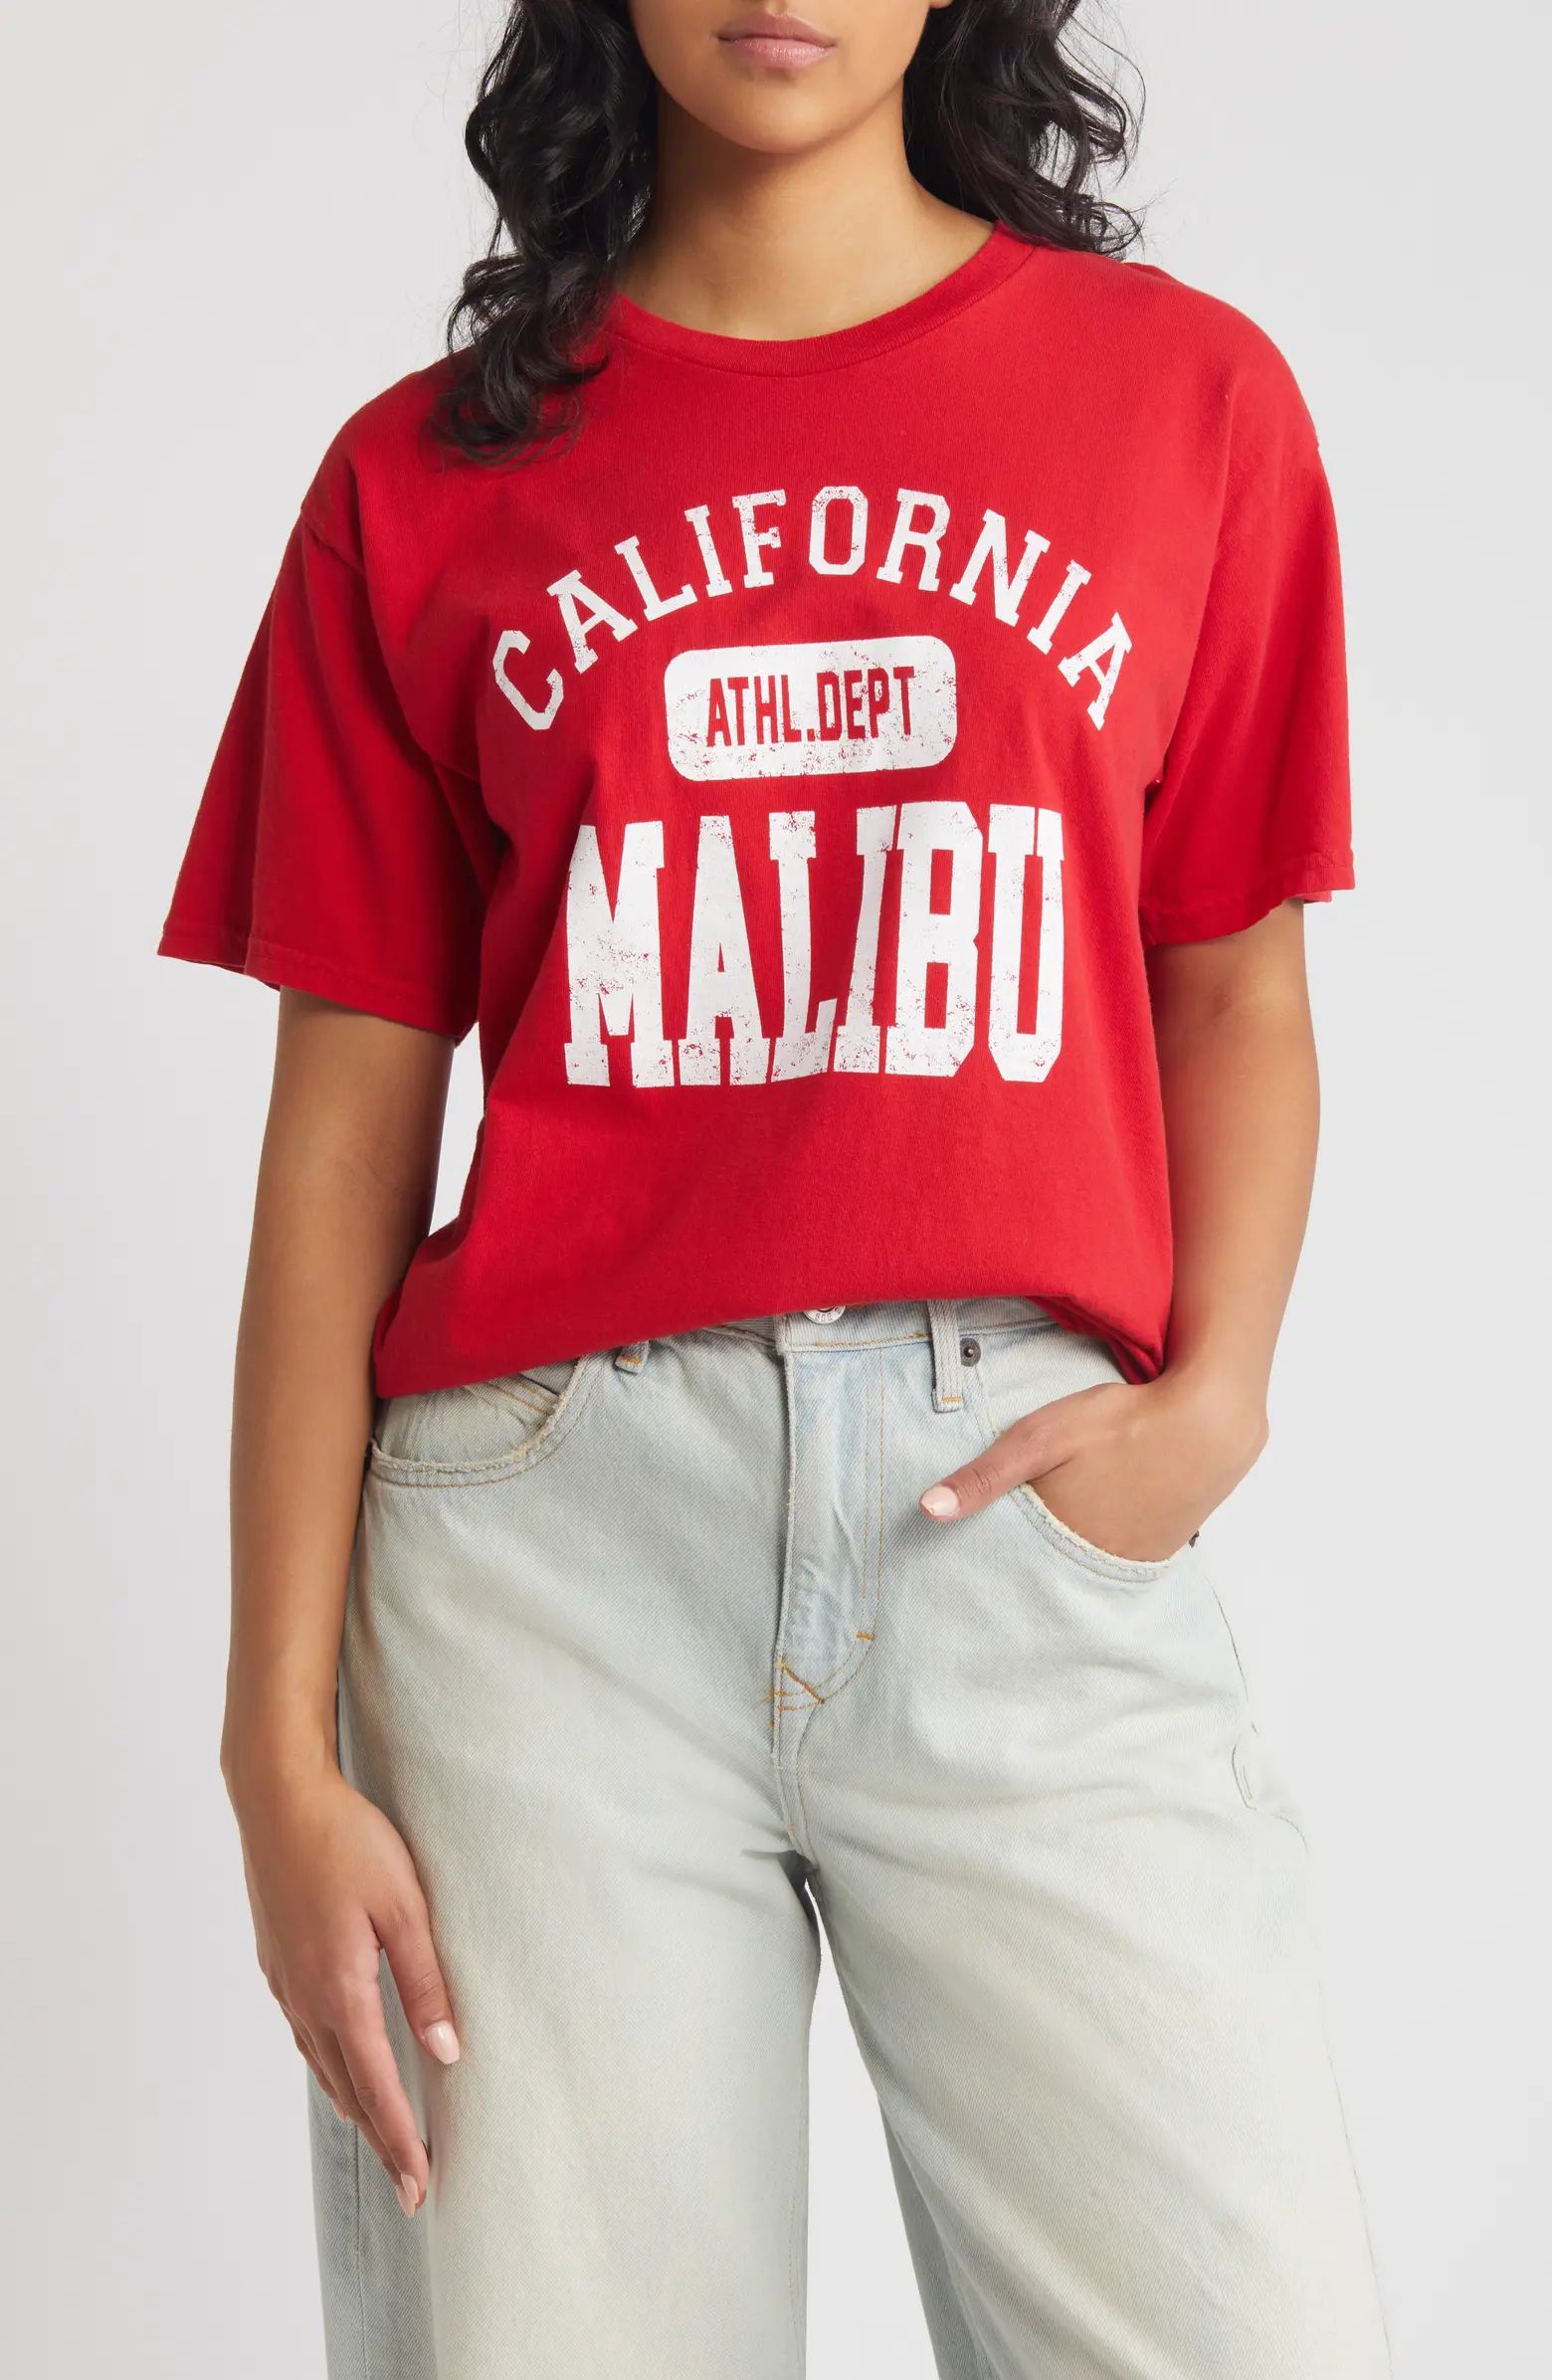 Malibu Athletic Department Graphic T-Shirt | Nordstrom